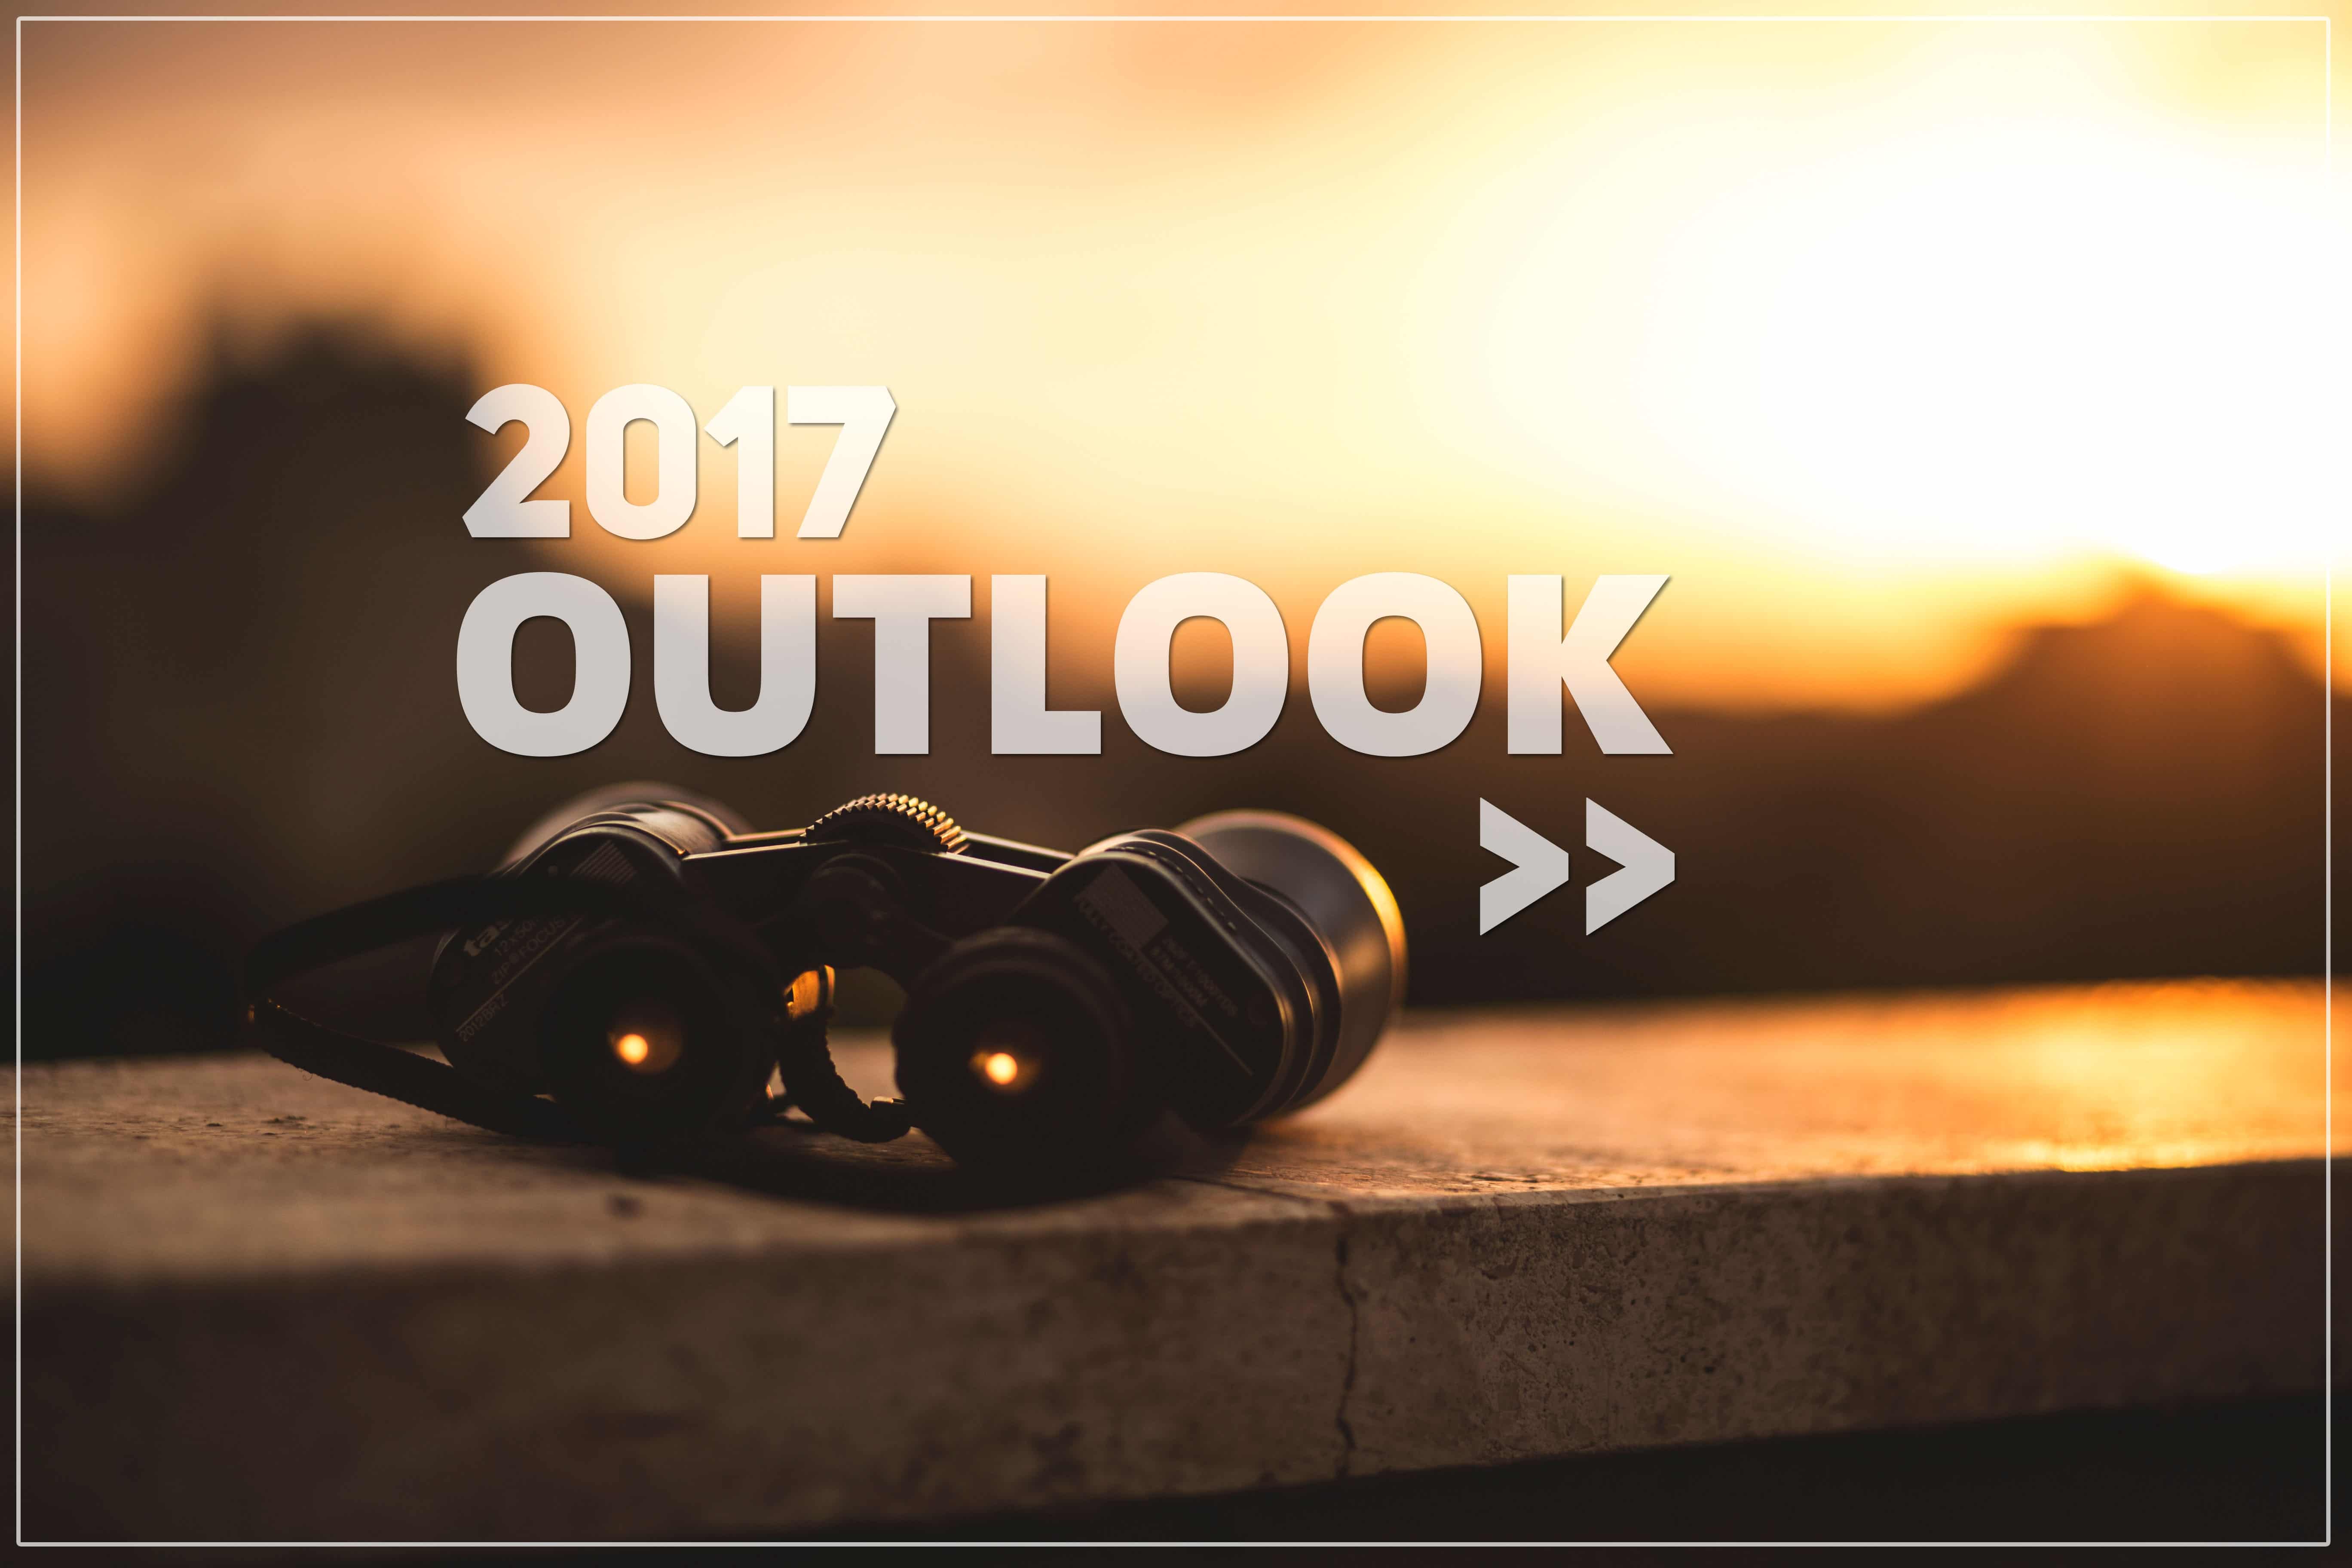 PRIER’s Outlook for 2017